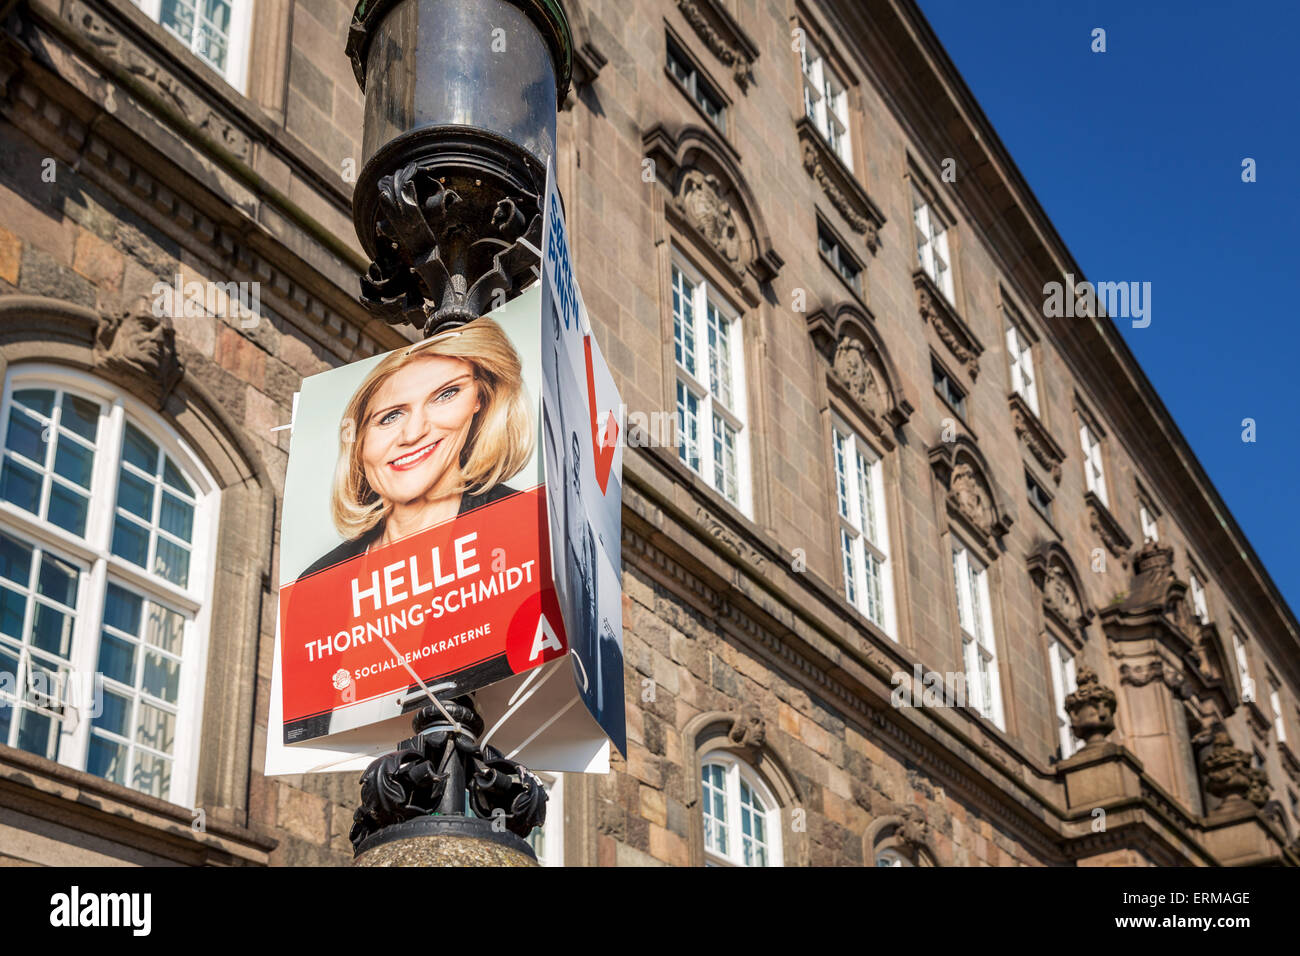 Election poster promoting Helle Thorning-Schmidt in front of the Danish Parliament, Copenhagen, Denmark Stock Photo